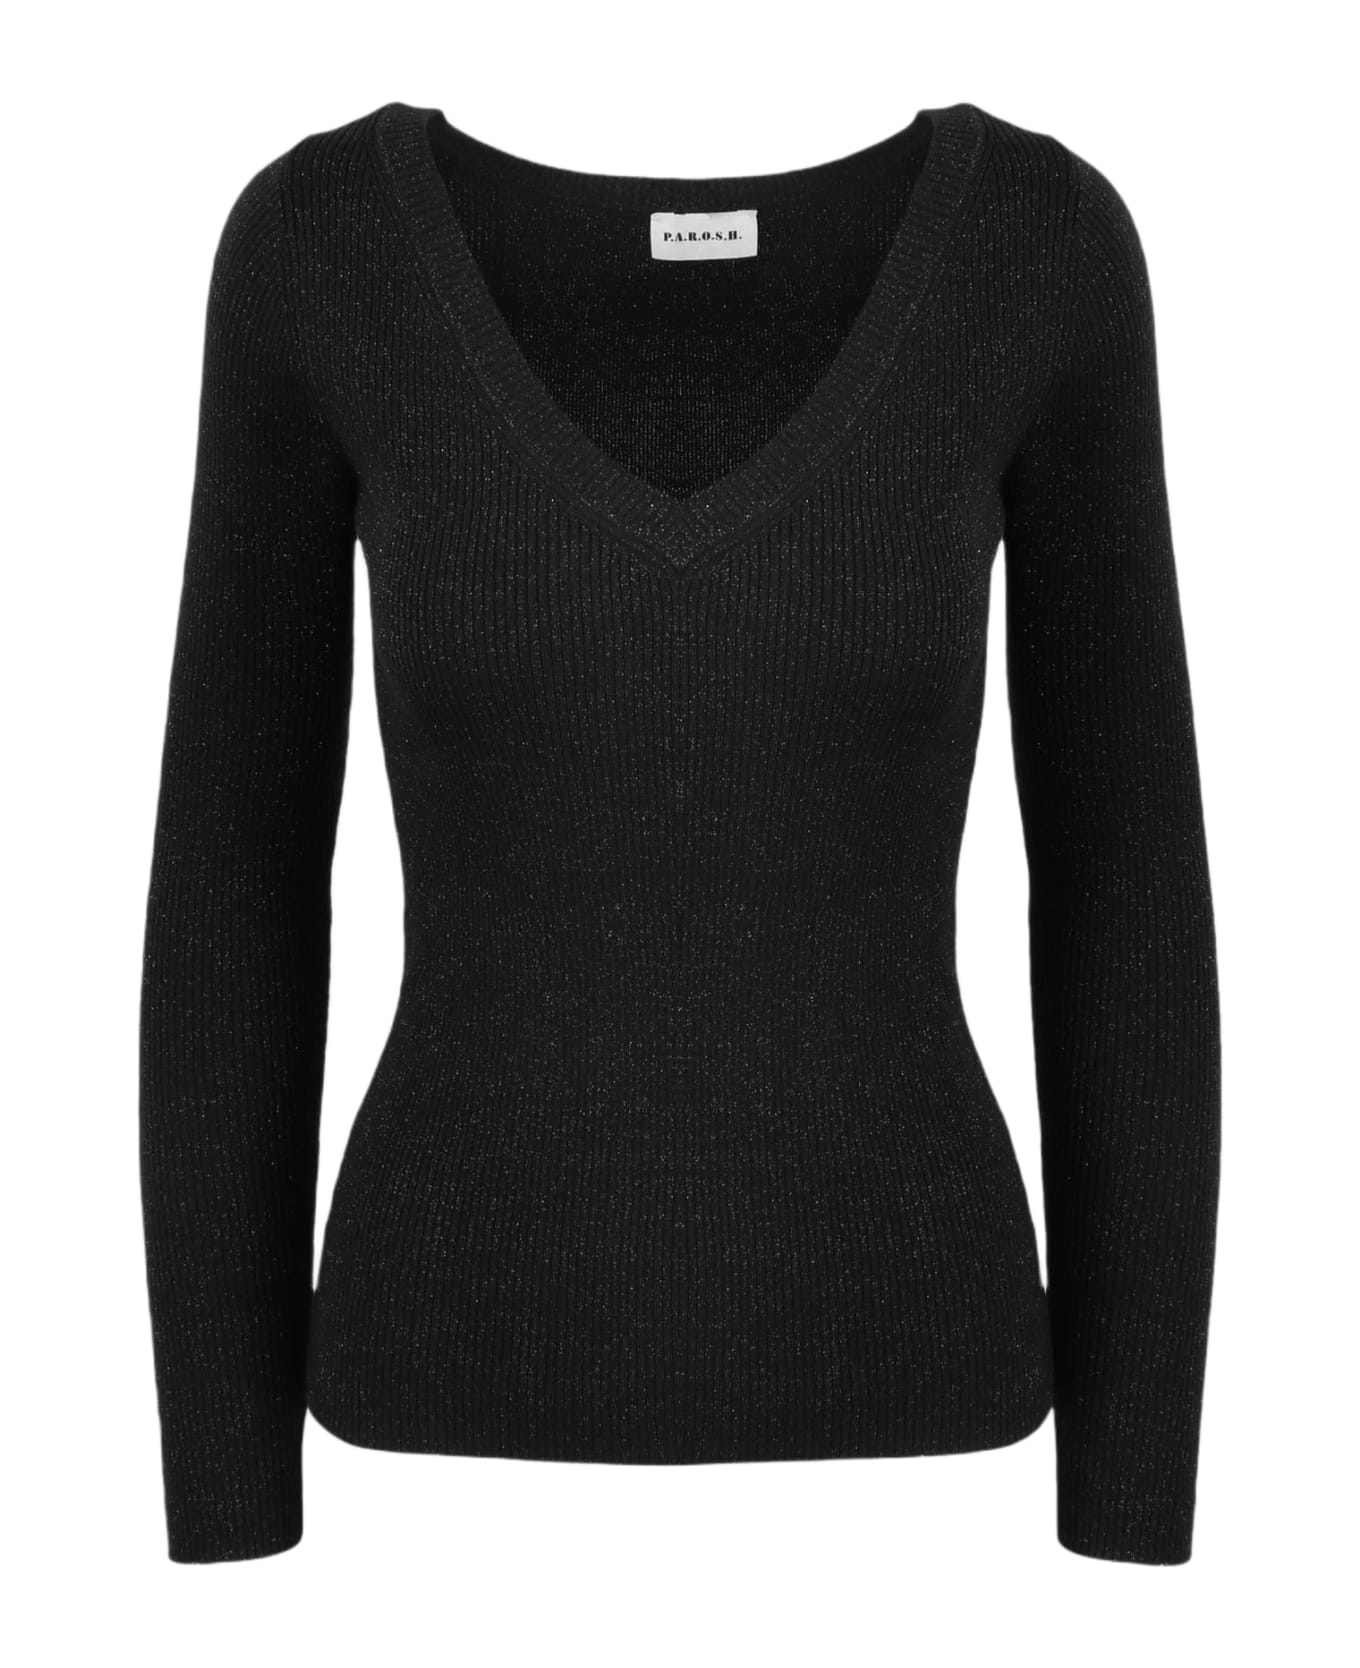 Parosh Loulux Sweater - Black